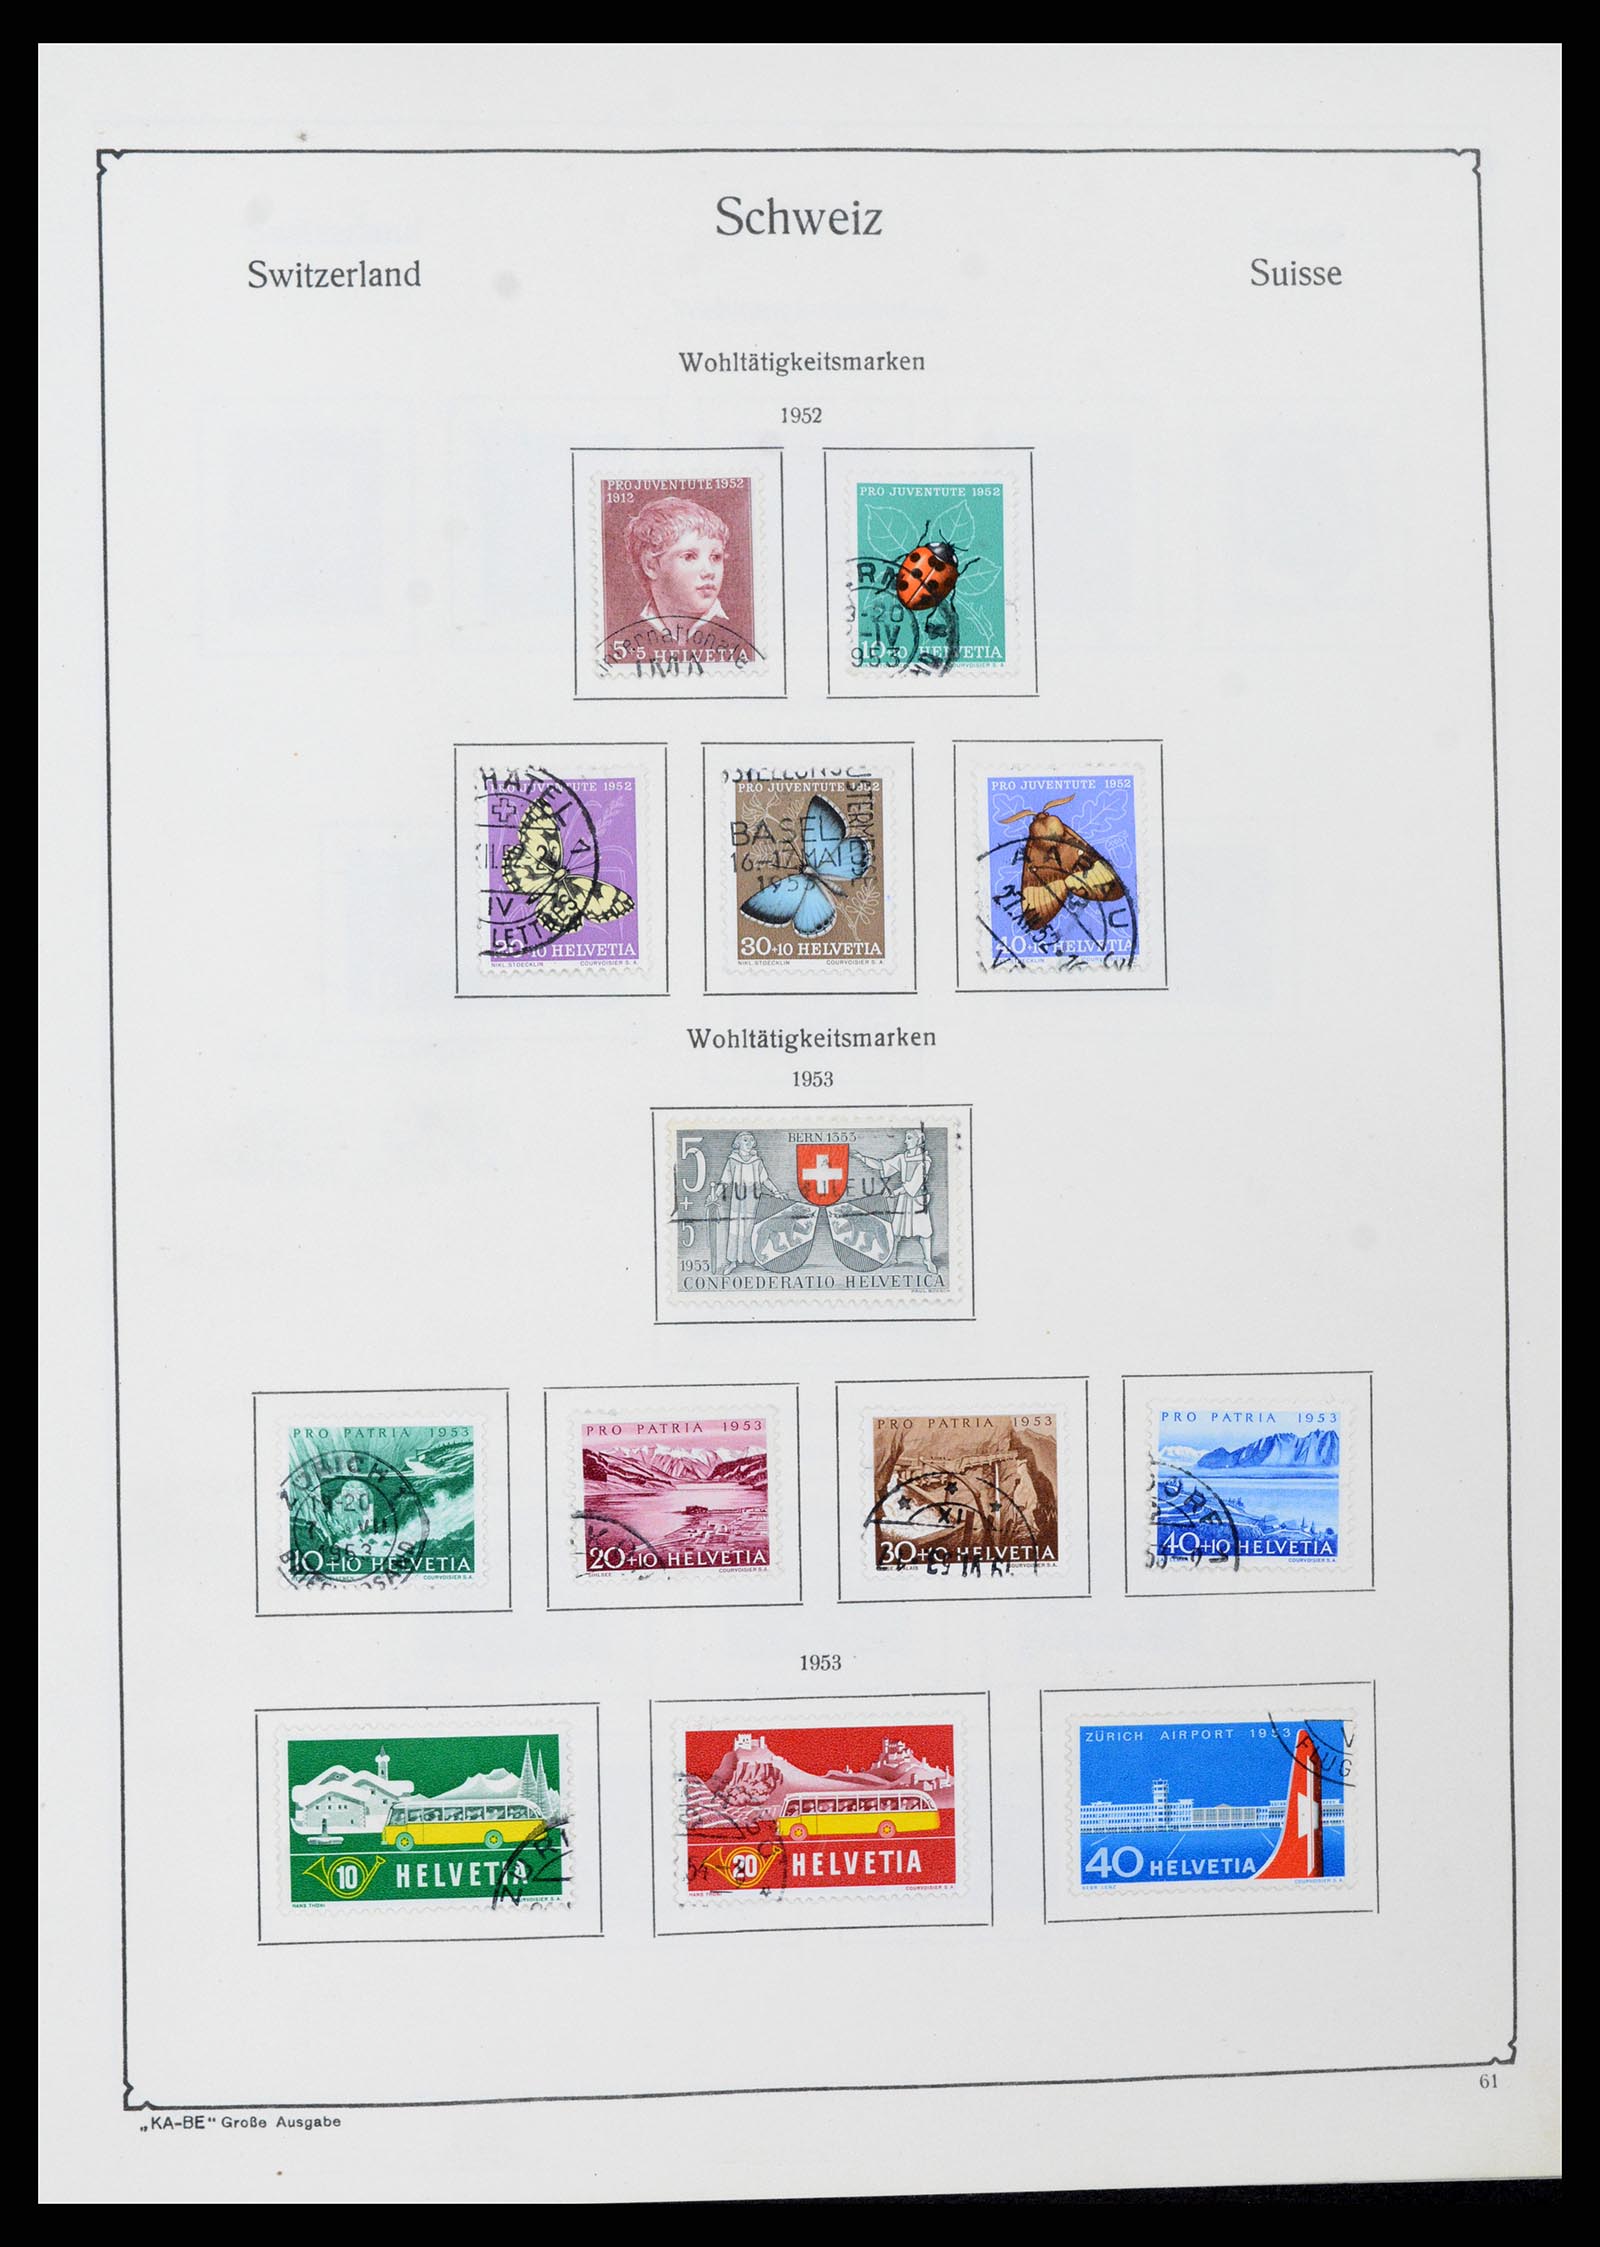 37588 057 - Stamp collection 37588 Switzerland 1854-1974.